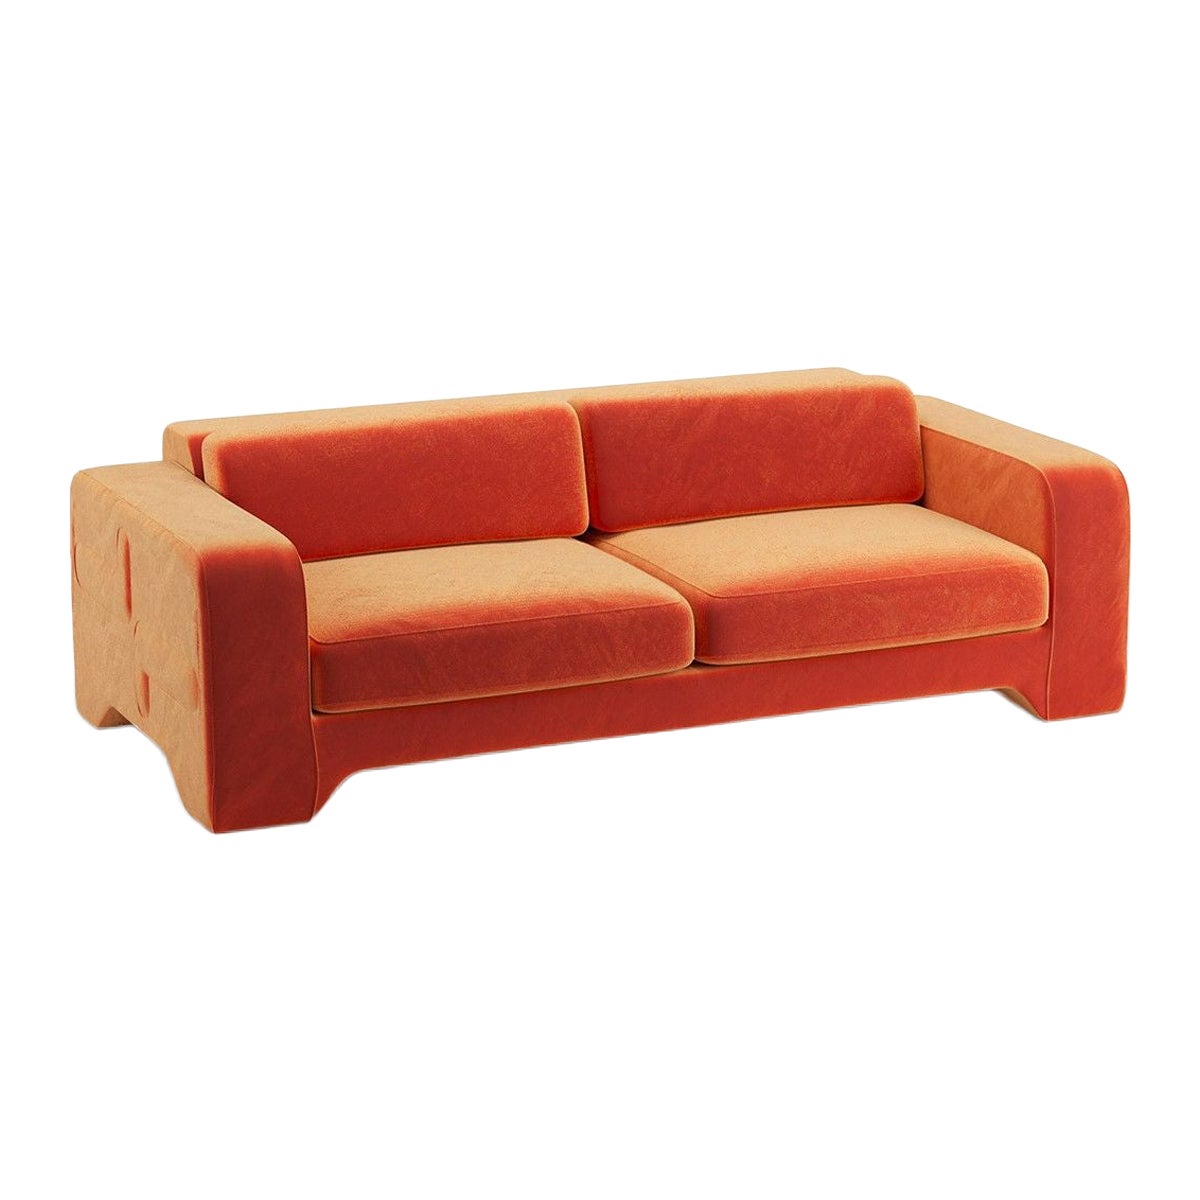 Popus Editions Giovanna 4 Seater Sofa in Orange Verone Velvet Upholstery